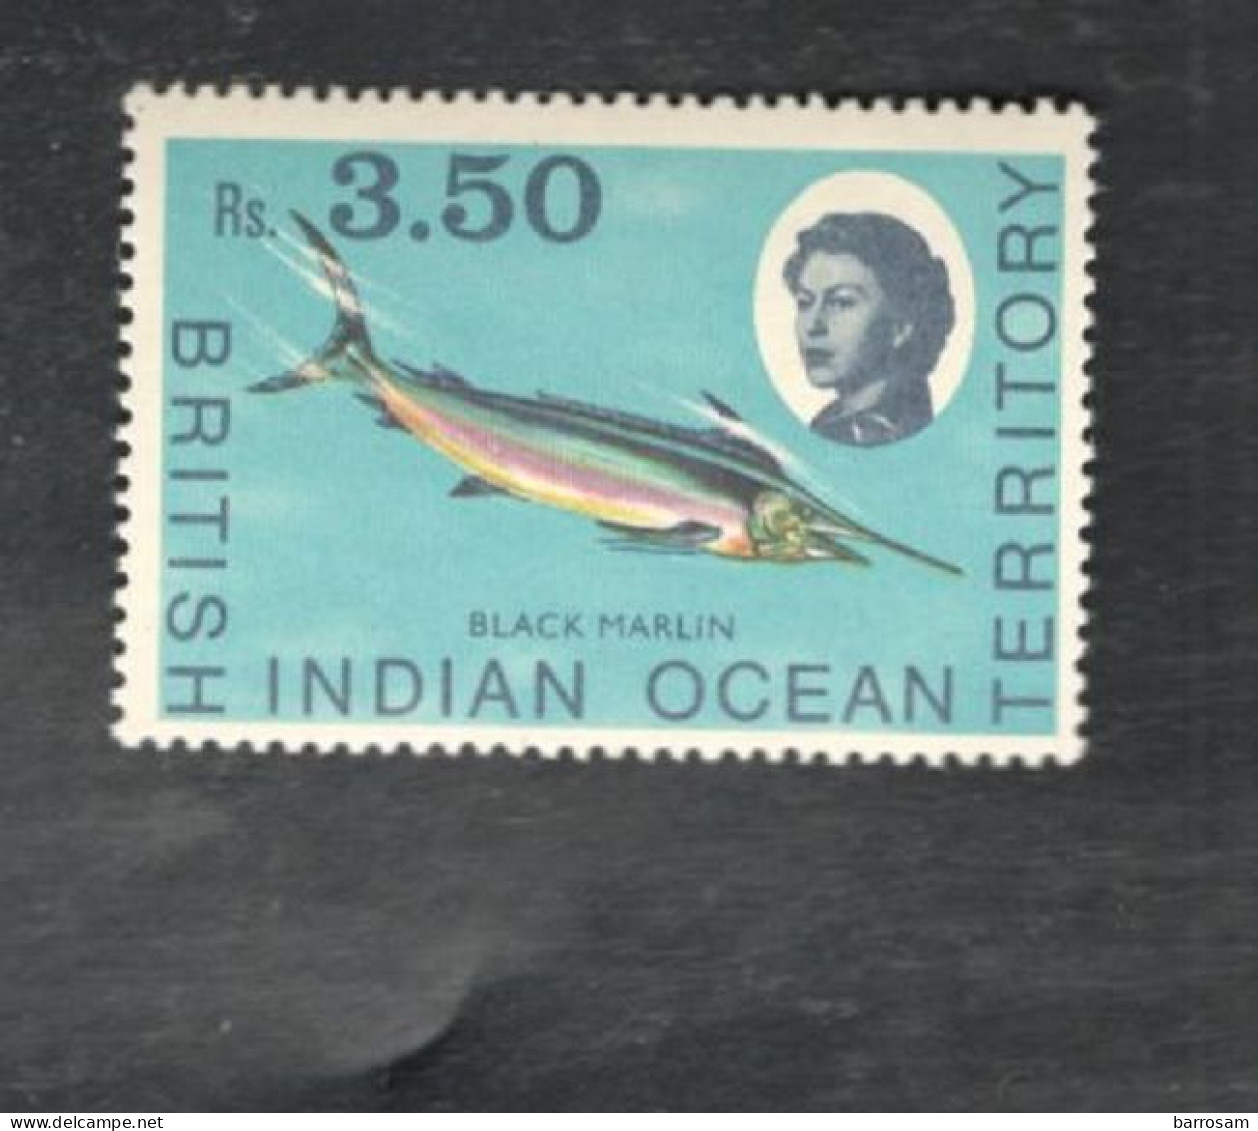 BRITISH INDIAN OCEAN TERRITORY....1968:Michel 28mnh** - Territoire Britannique De L'Océan Indien